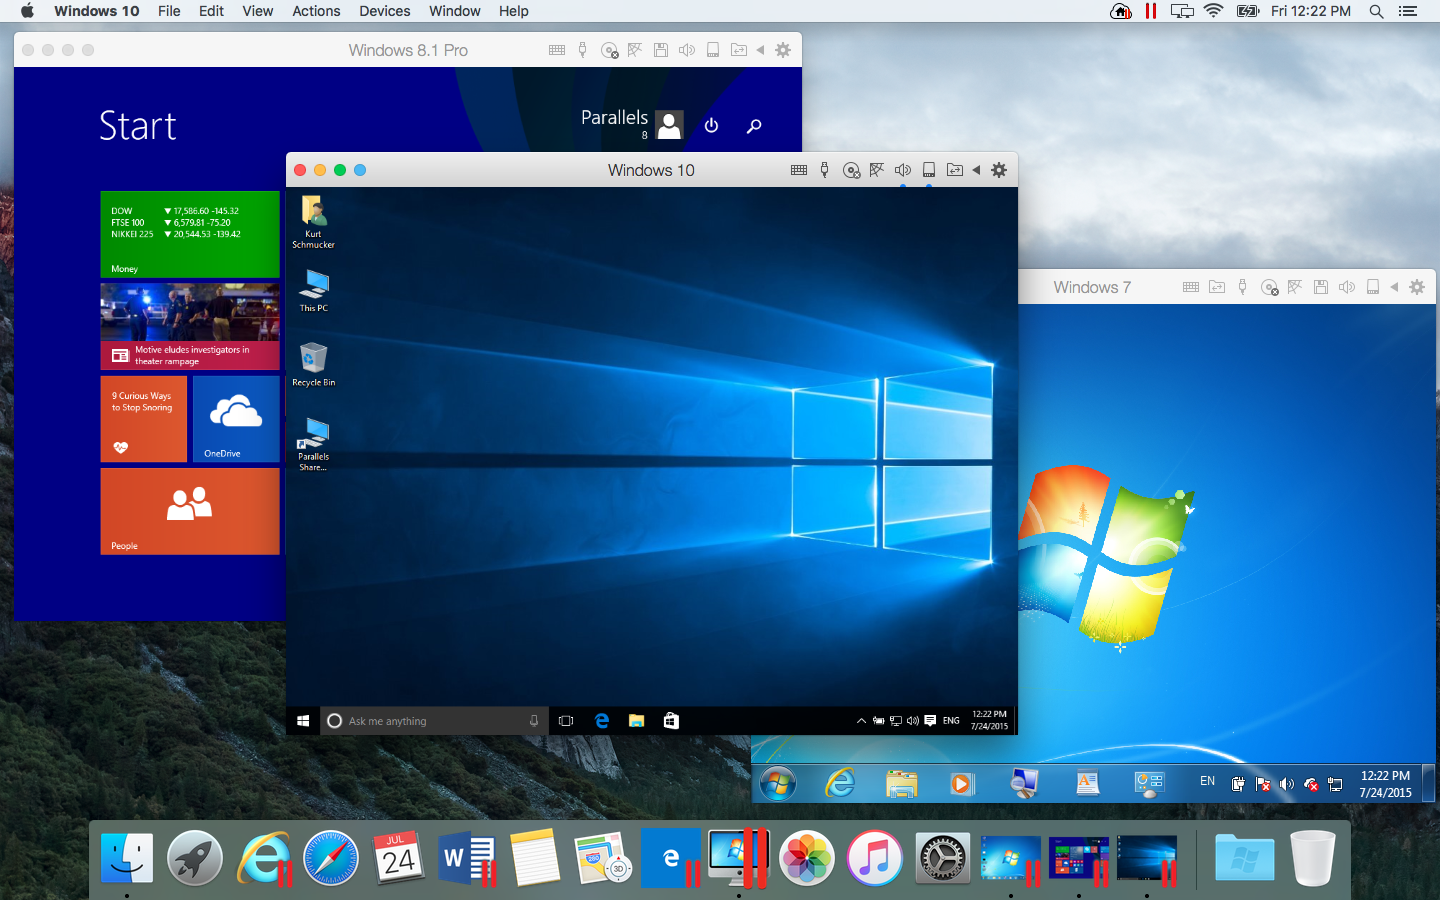 Parallels Desktop 9 For Mac Vm Windows